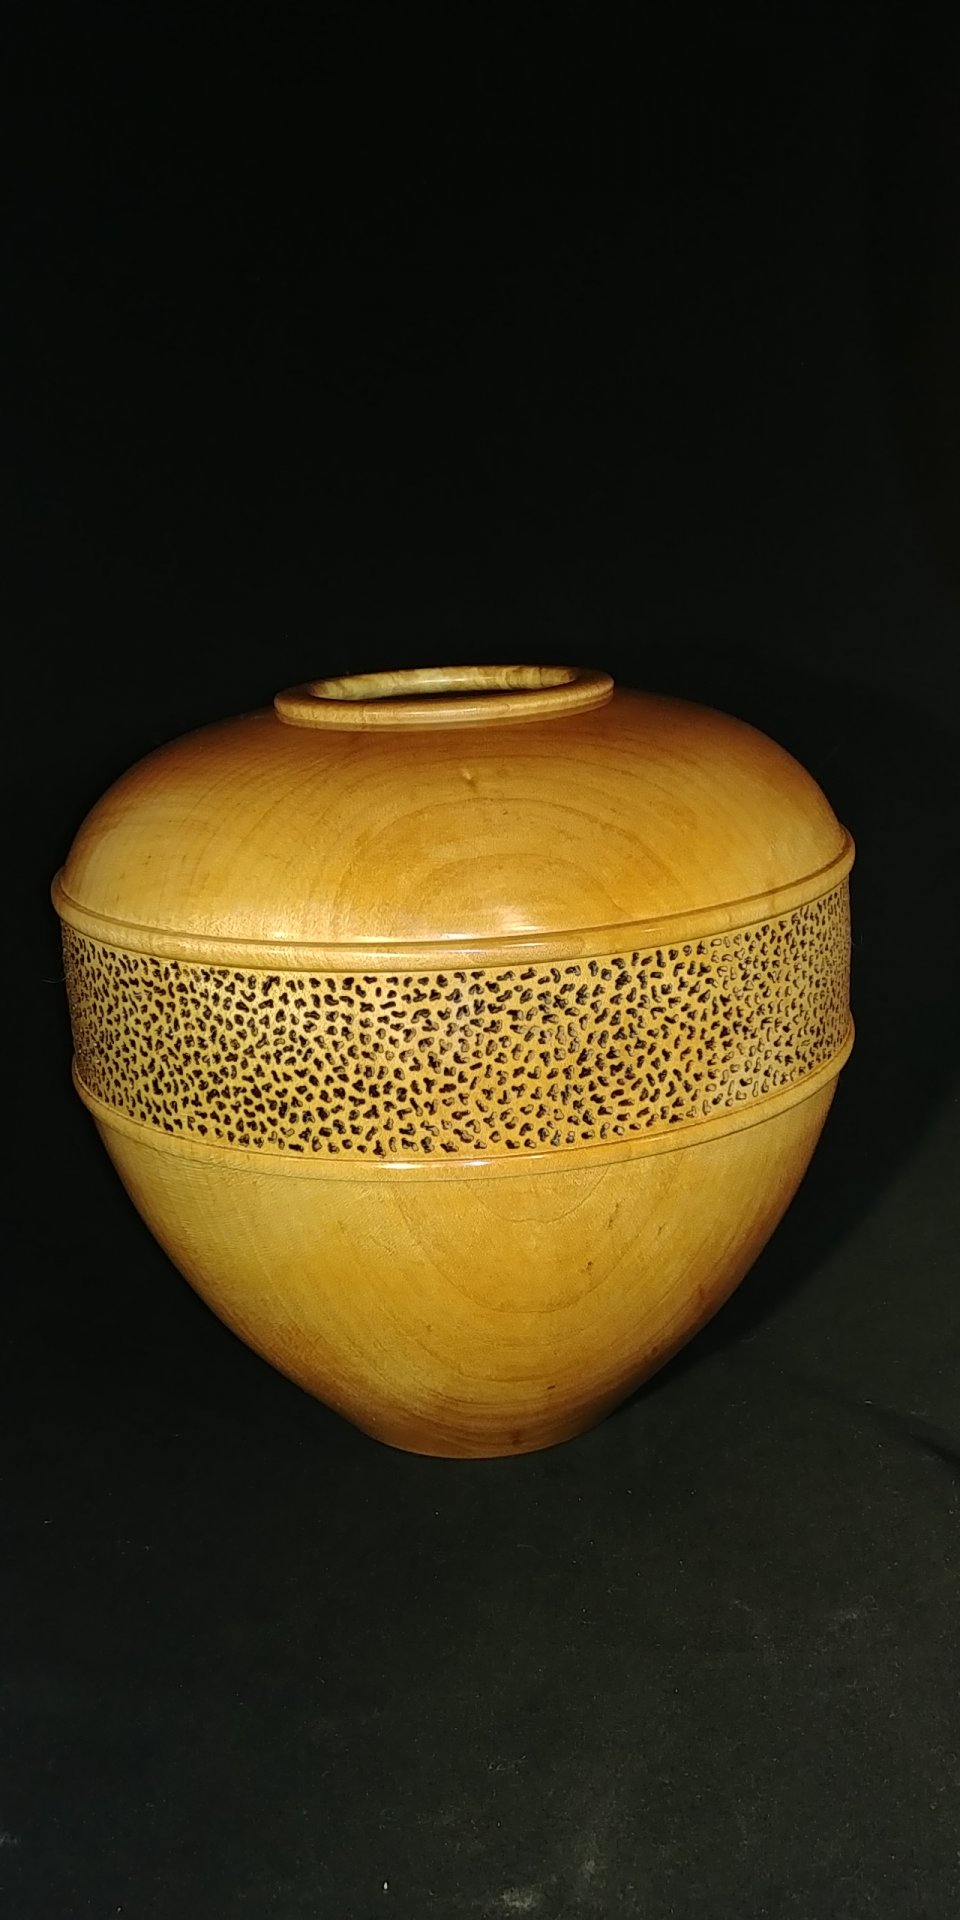 Pierced maple hollow form